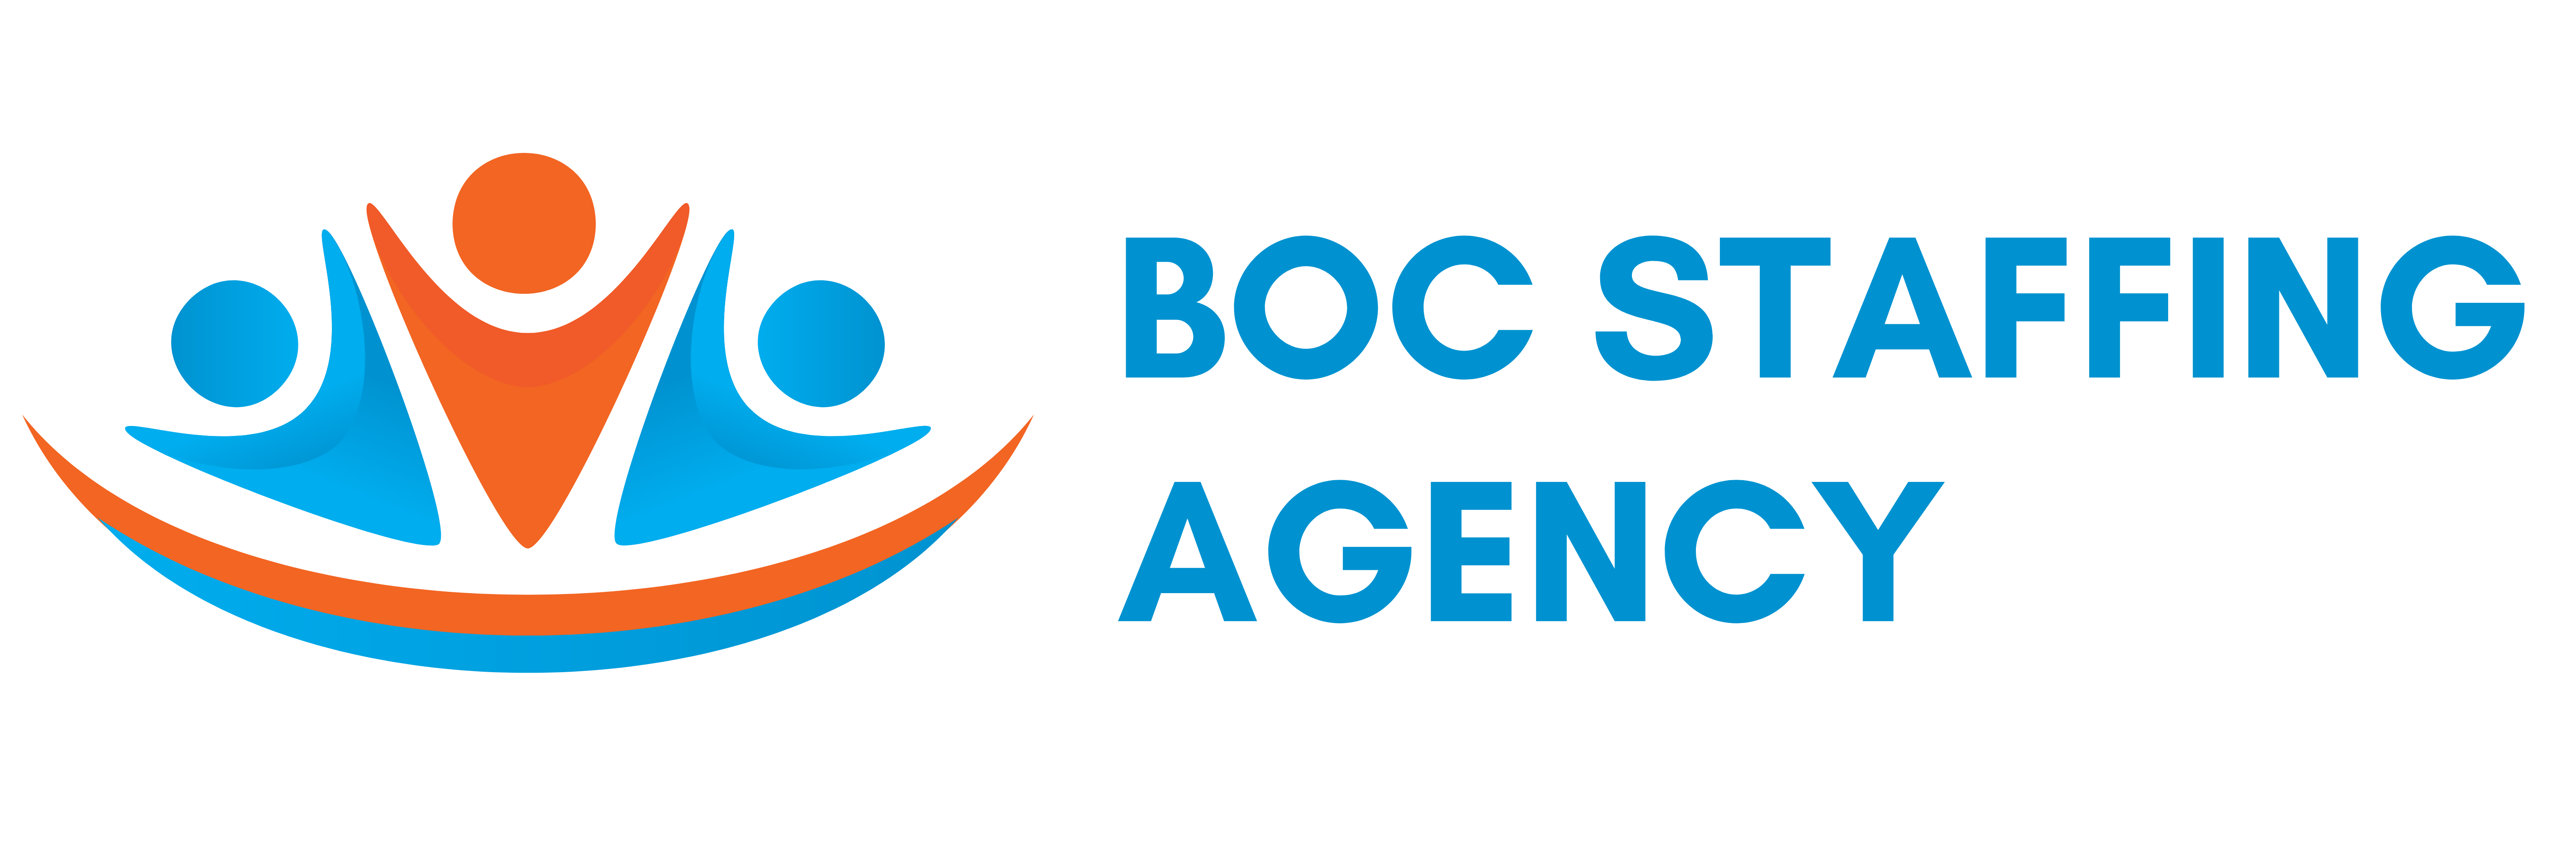 Boc Staffing Agency